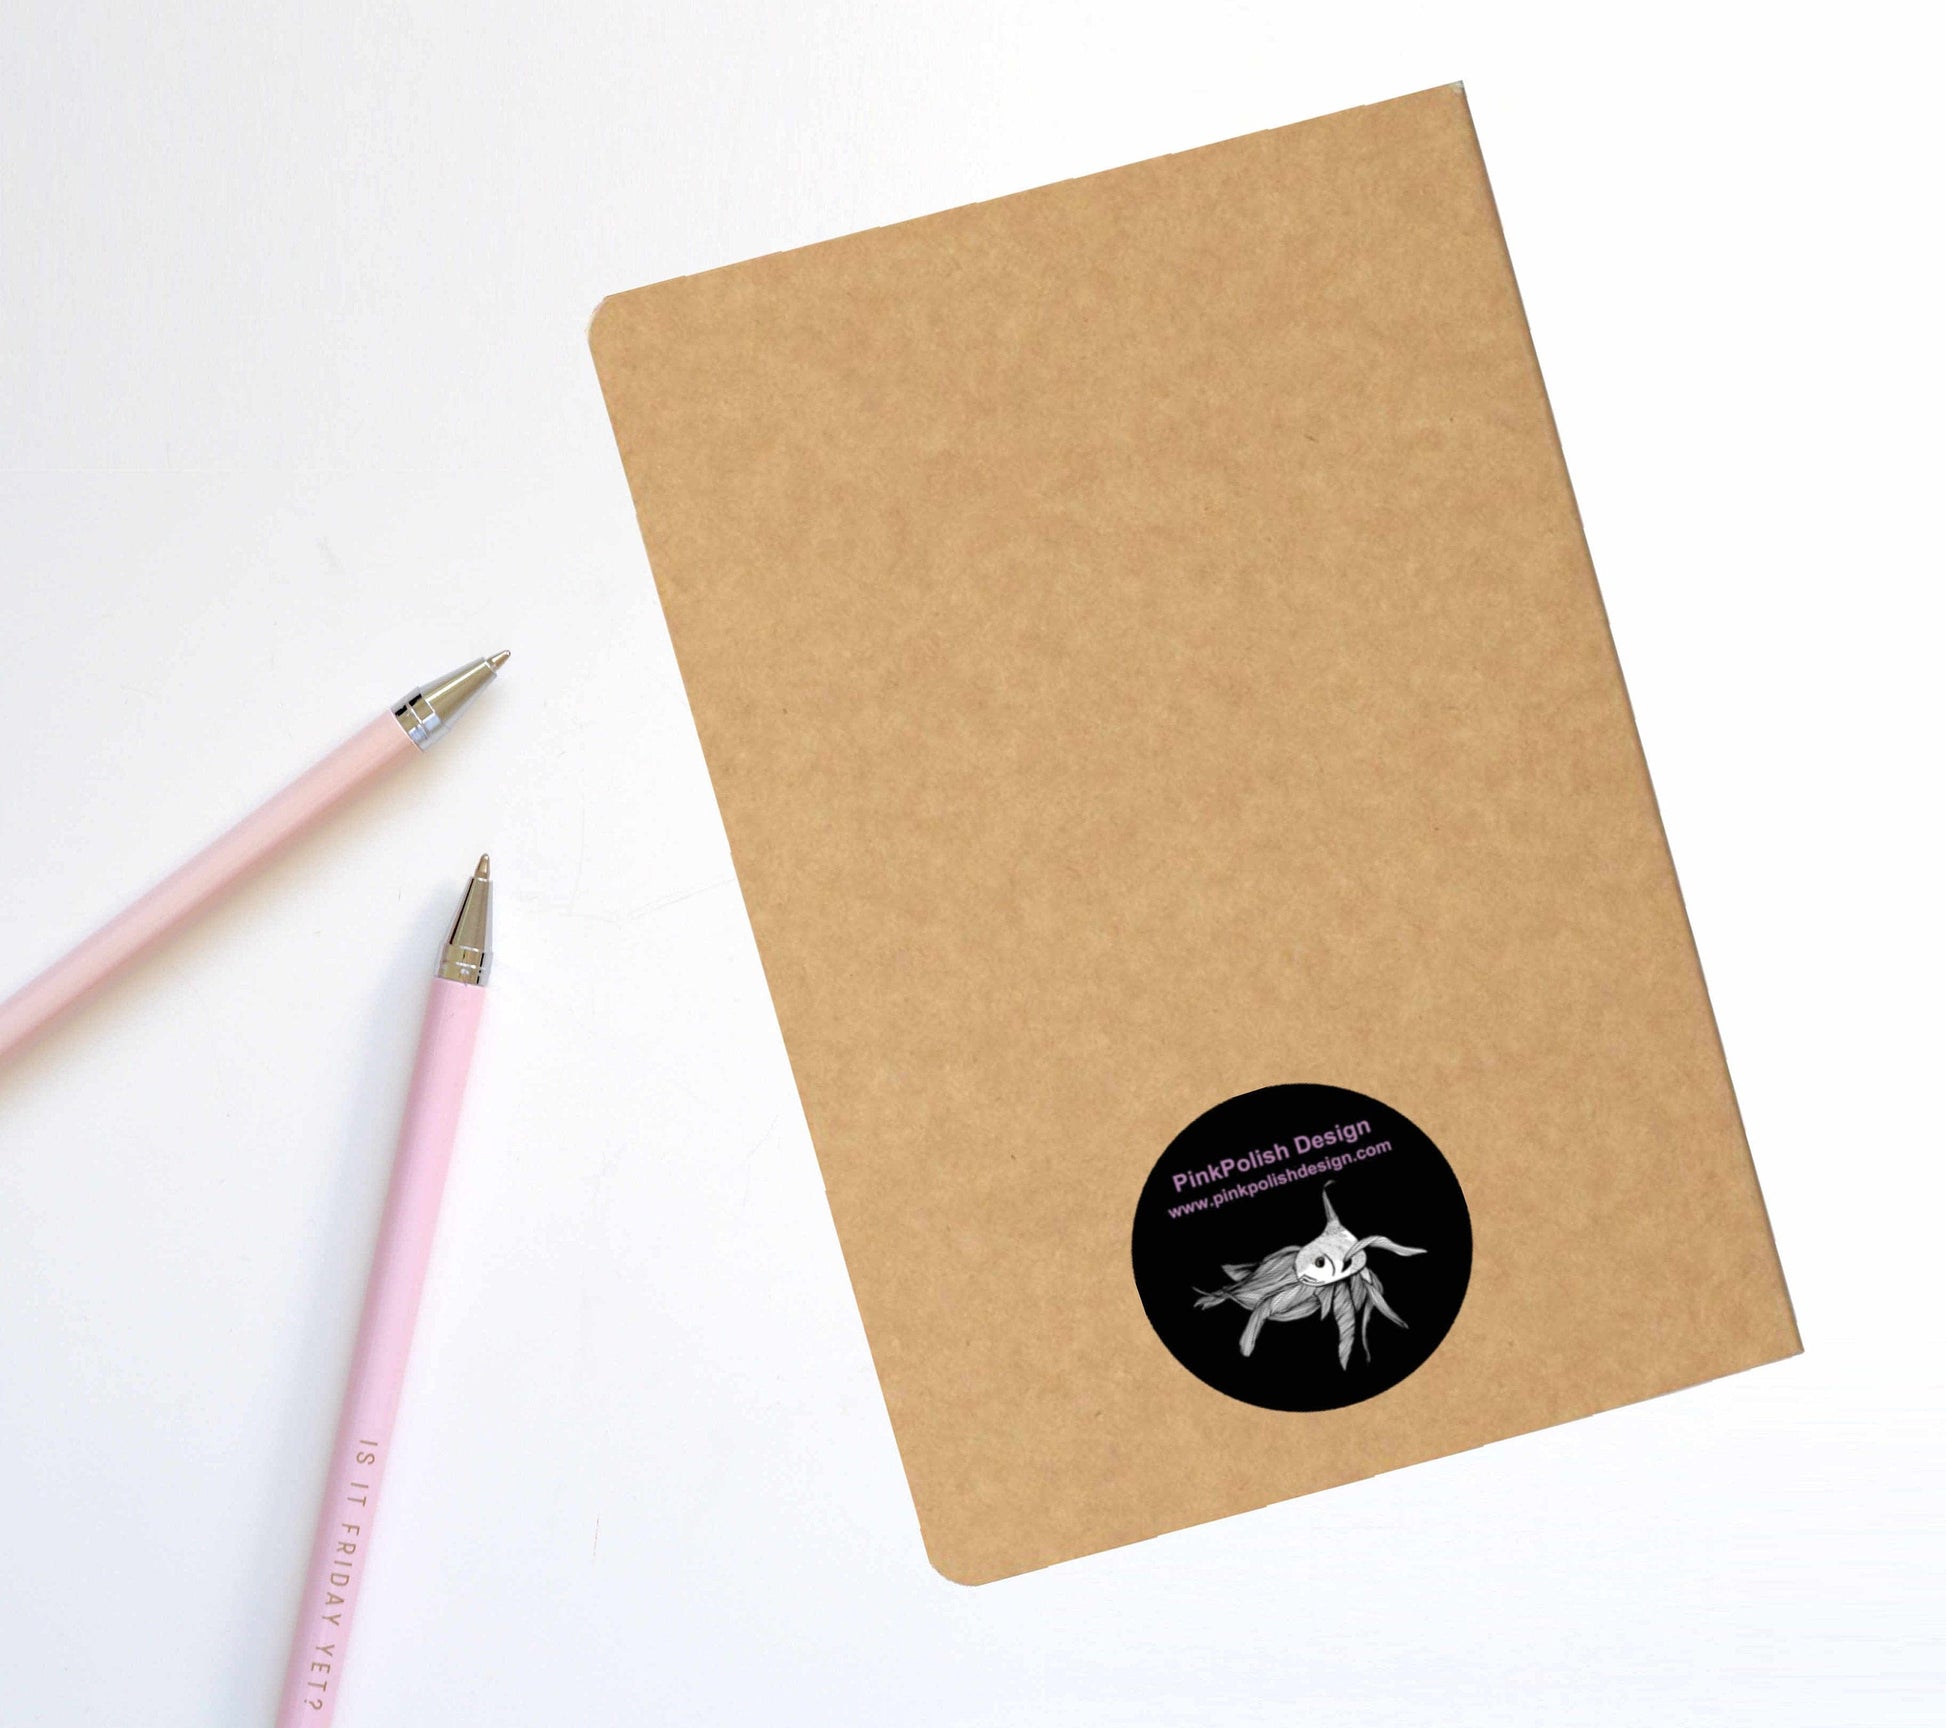 PinkPolish Design Notebook "Foxicorn" Unicorn Horned Fox Inspired Notebook / Sketchbook / Journal